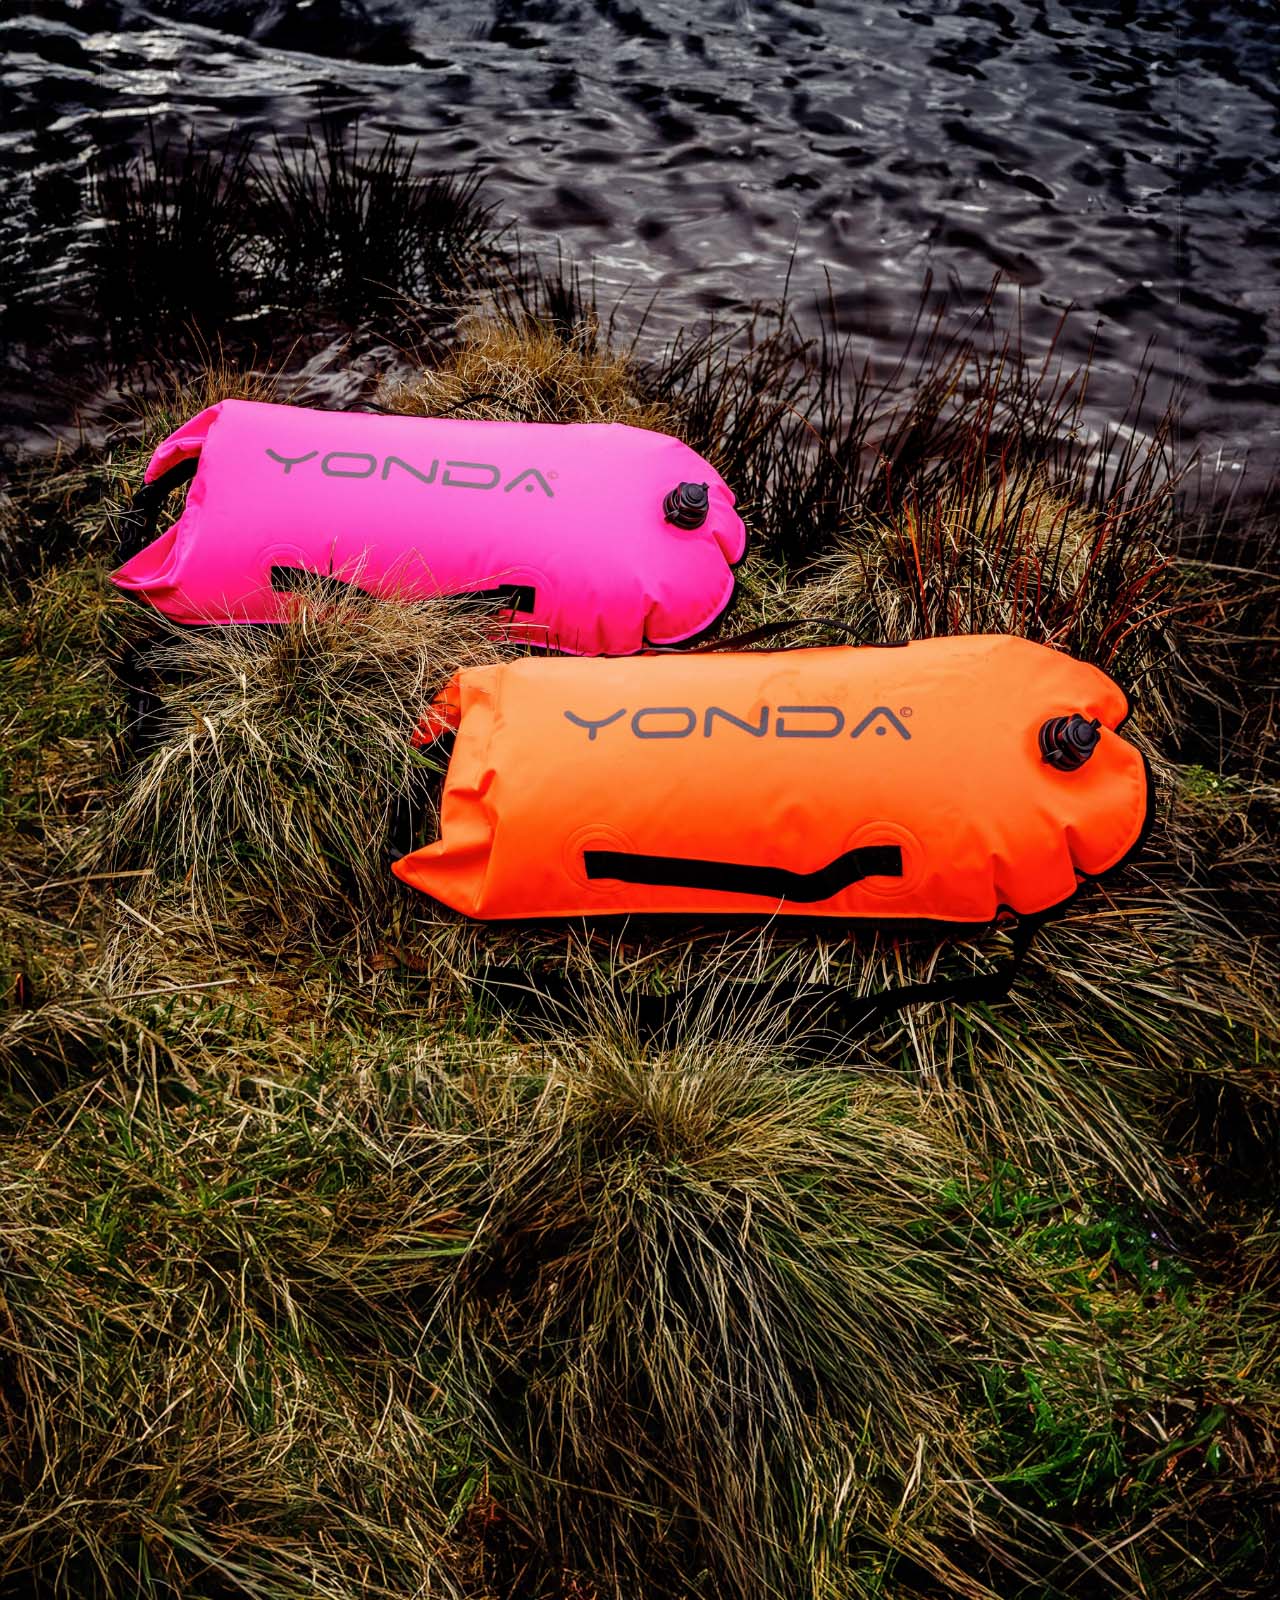 Yonda Swimming Tow Float Safety Buoy & Drybag - Lake